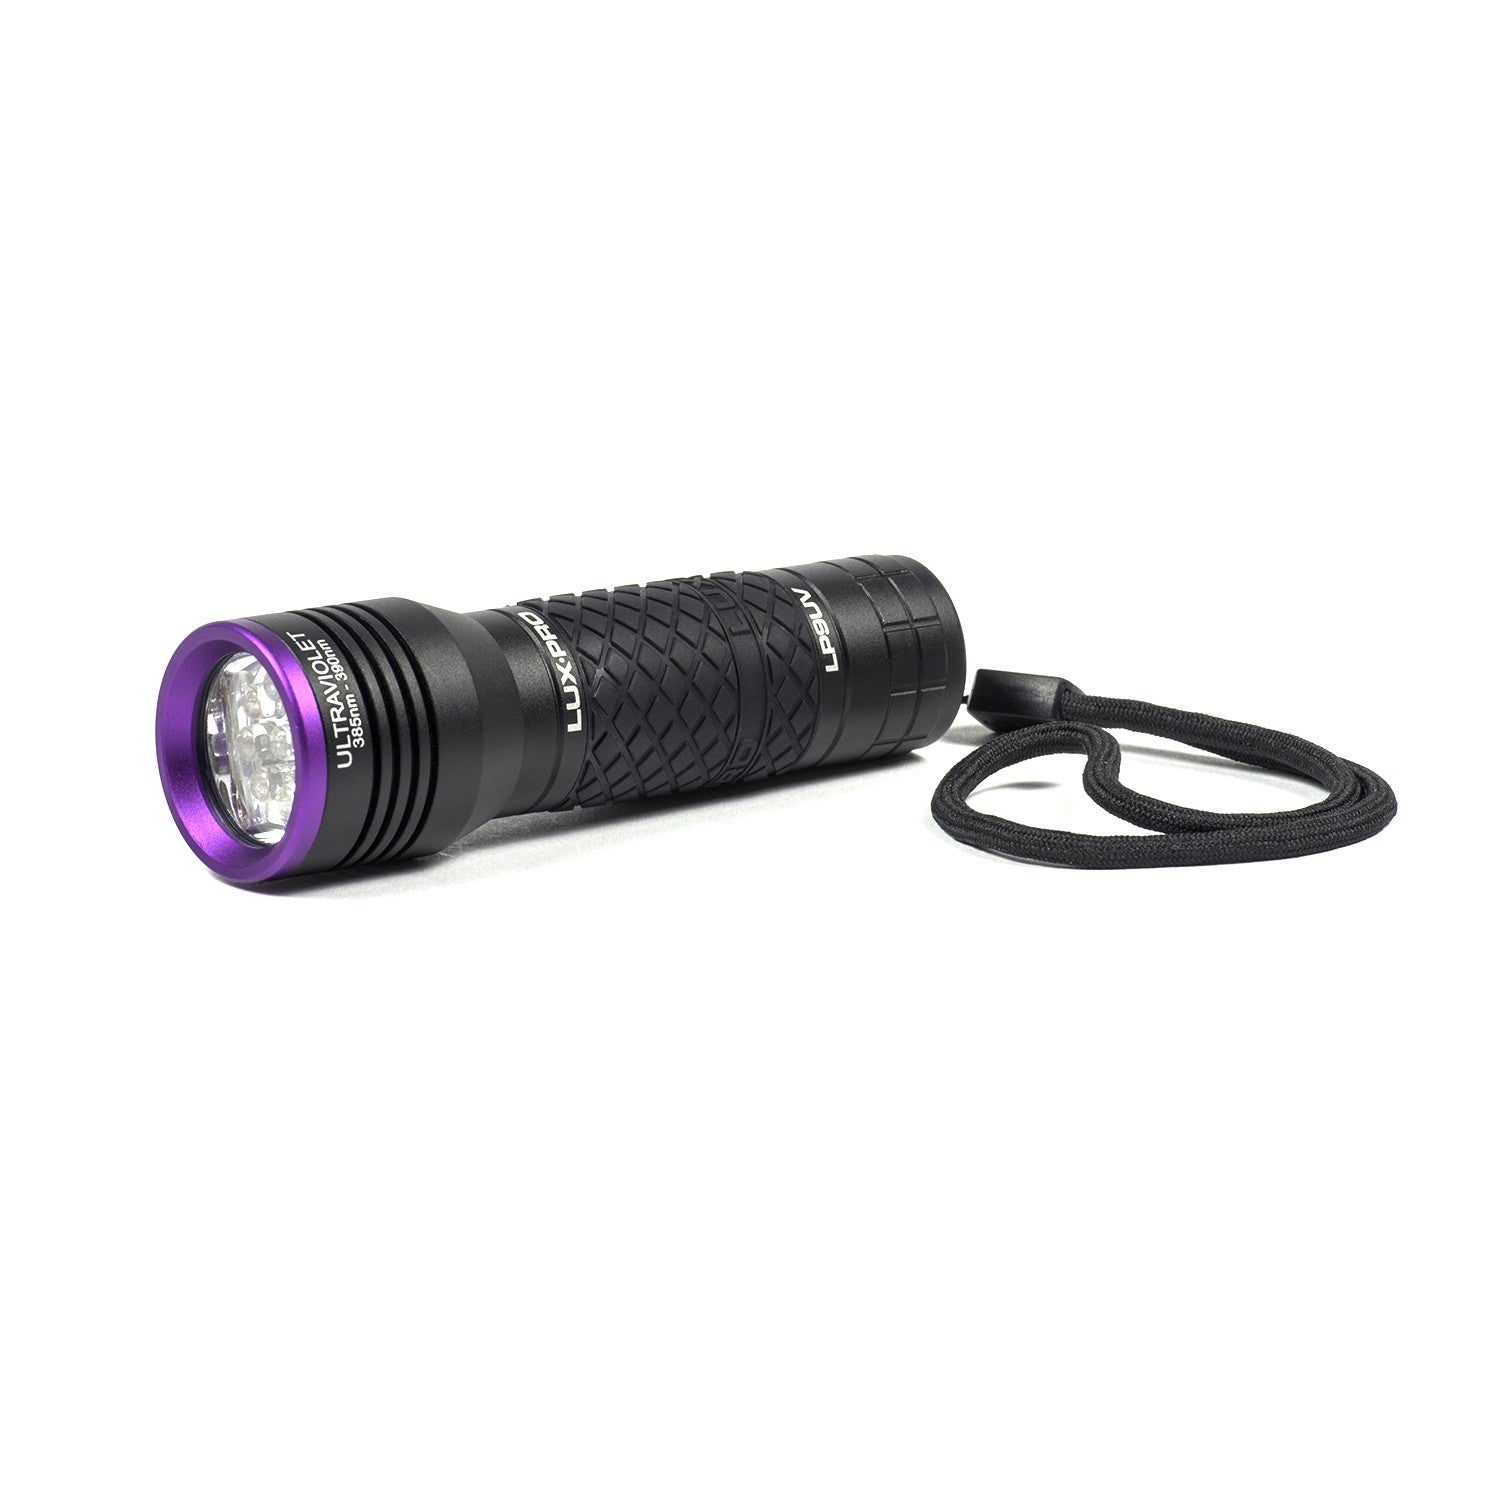 Luxpro Uv Illuminator Flashlight